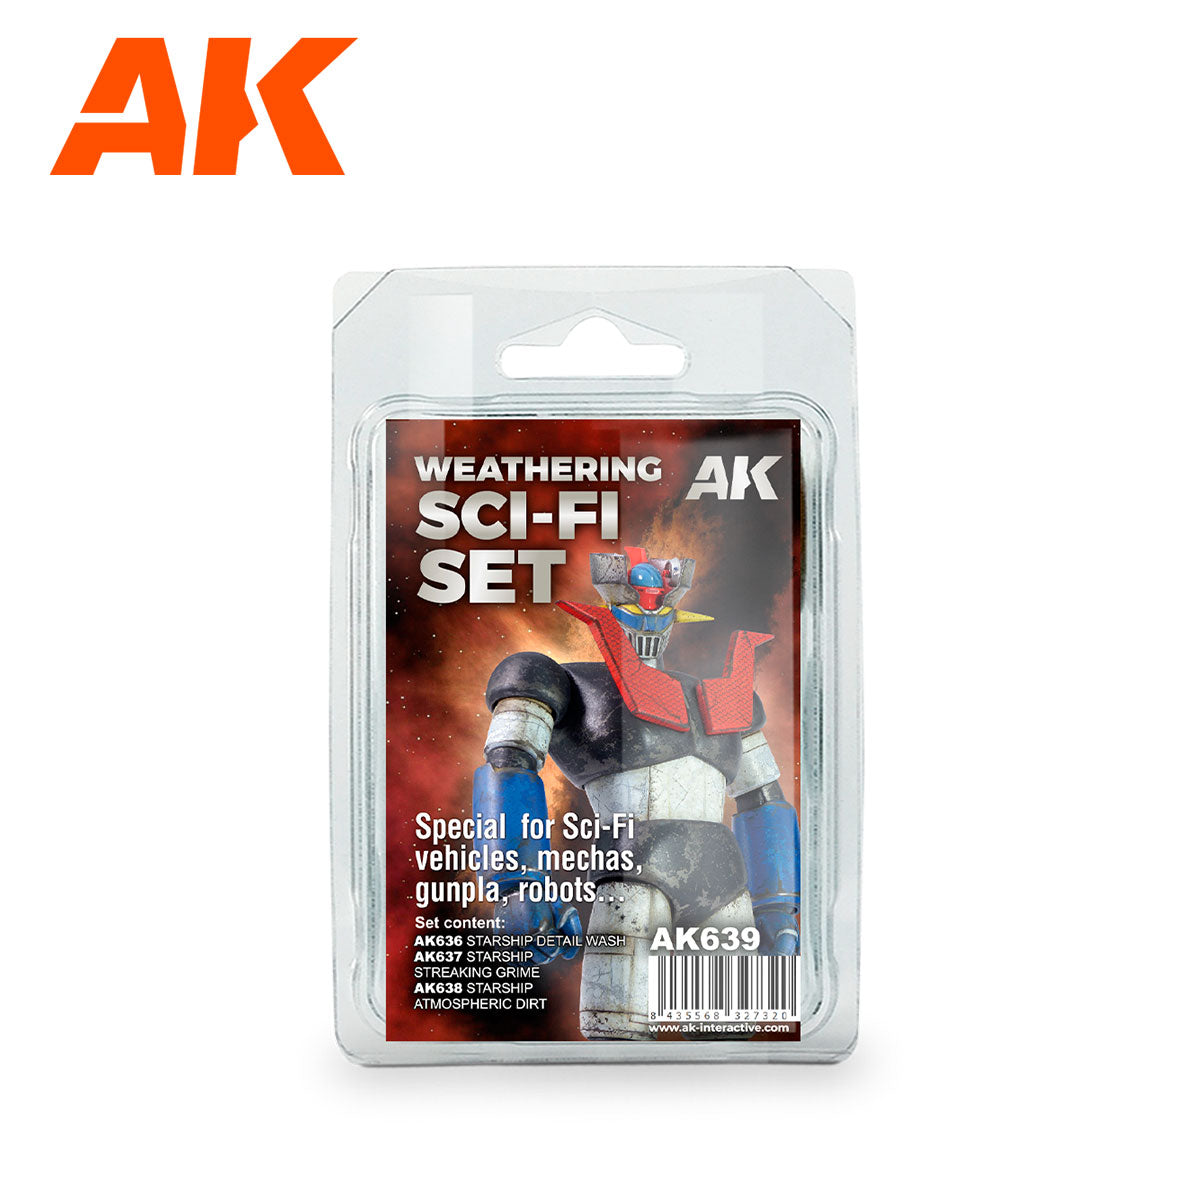 AK639 - Weathering SCI-FI Set